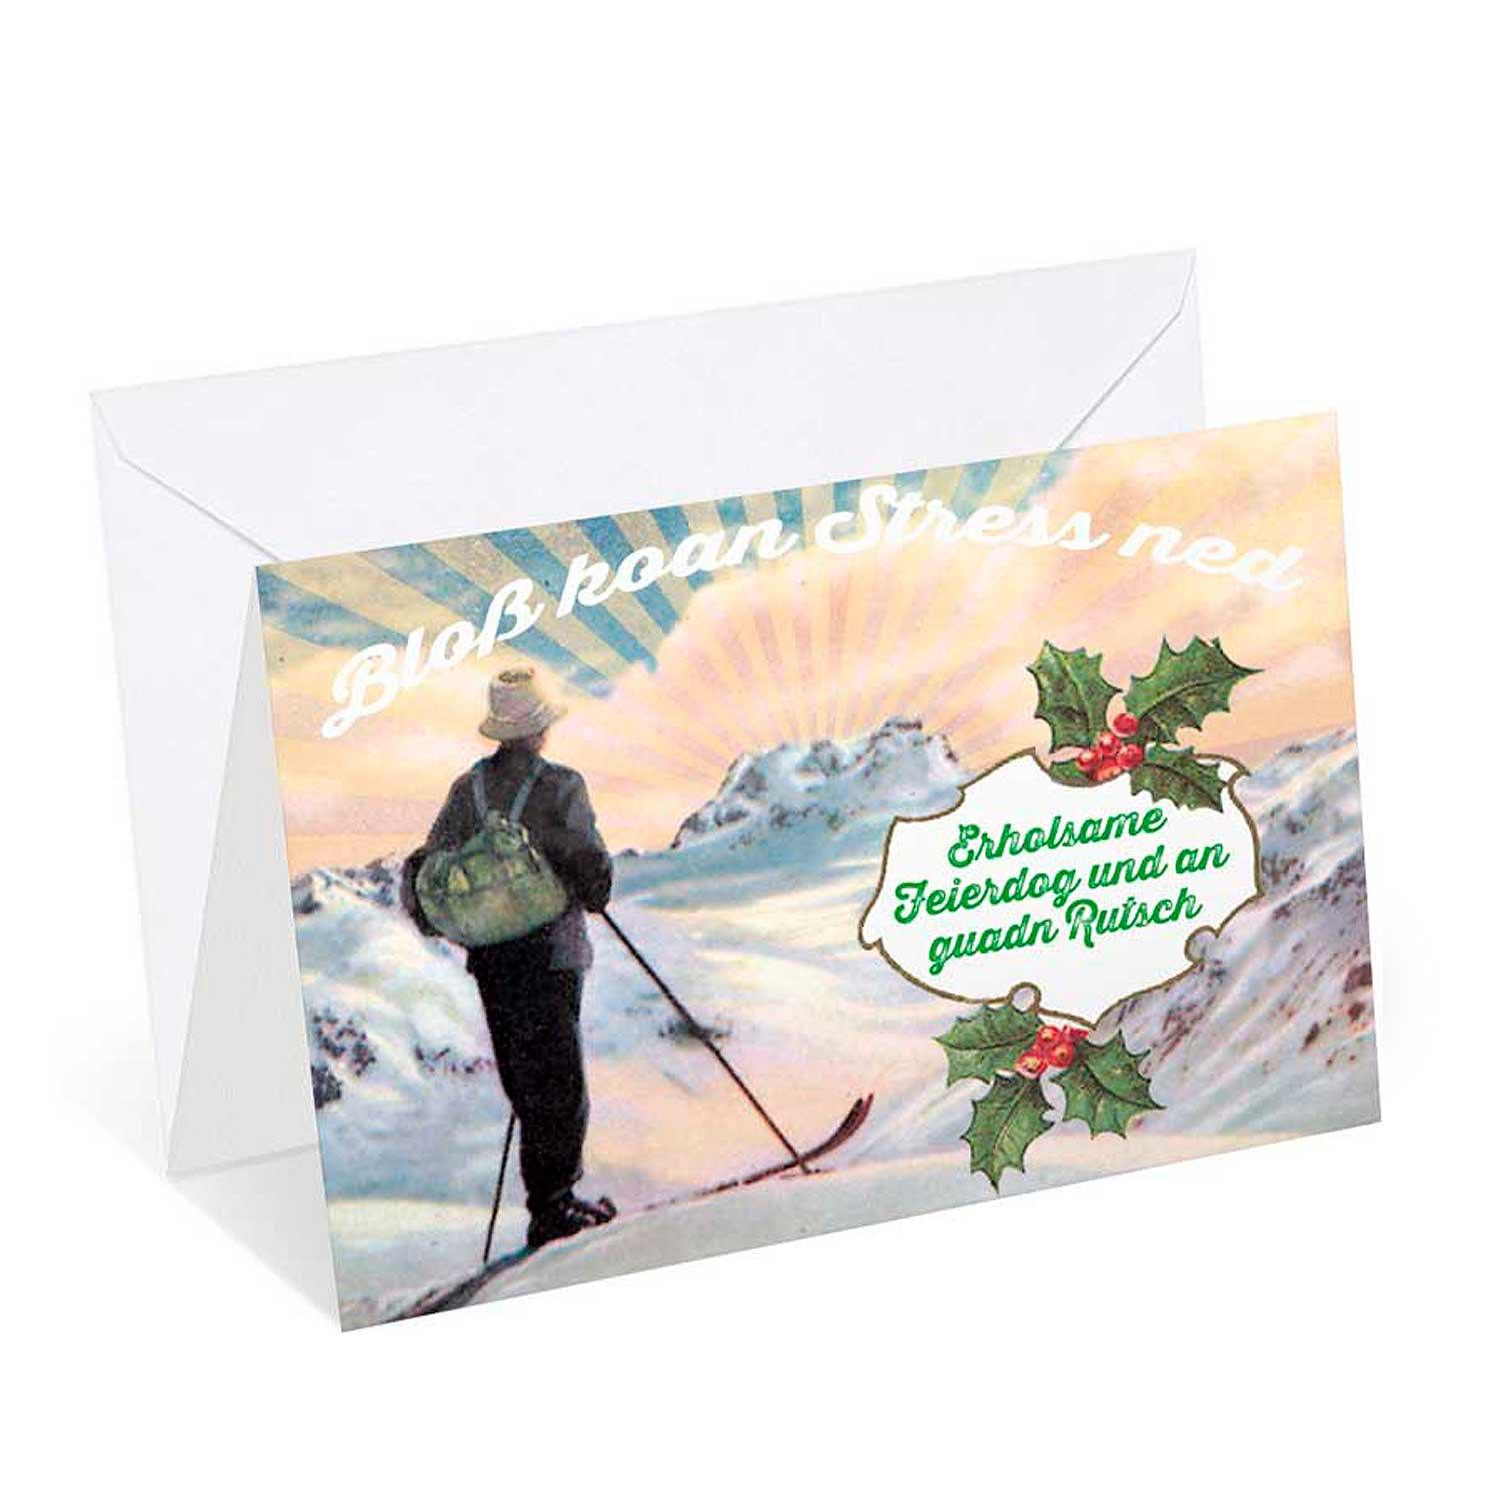 Weihnachtskarte "Bloß koan Stress" - bavariashop - mei LebensGfui